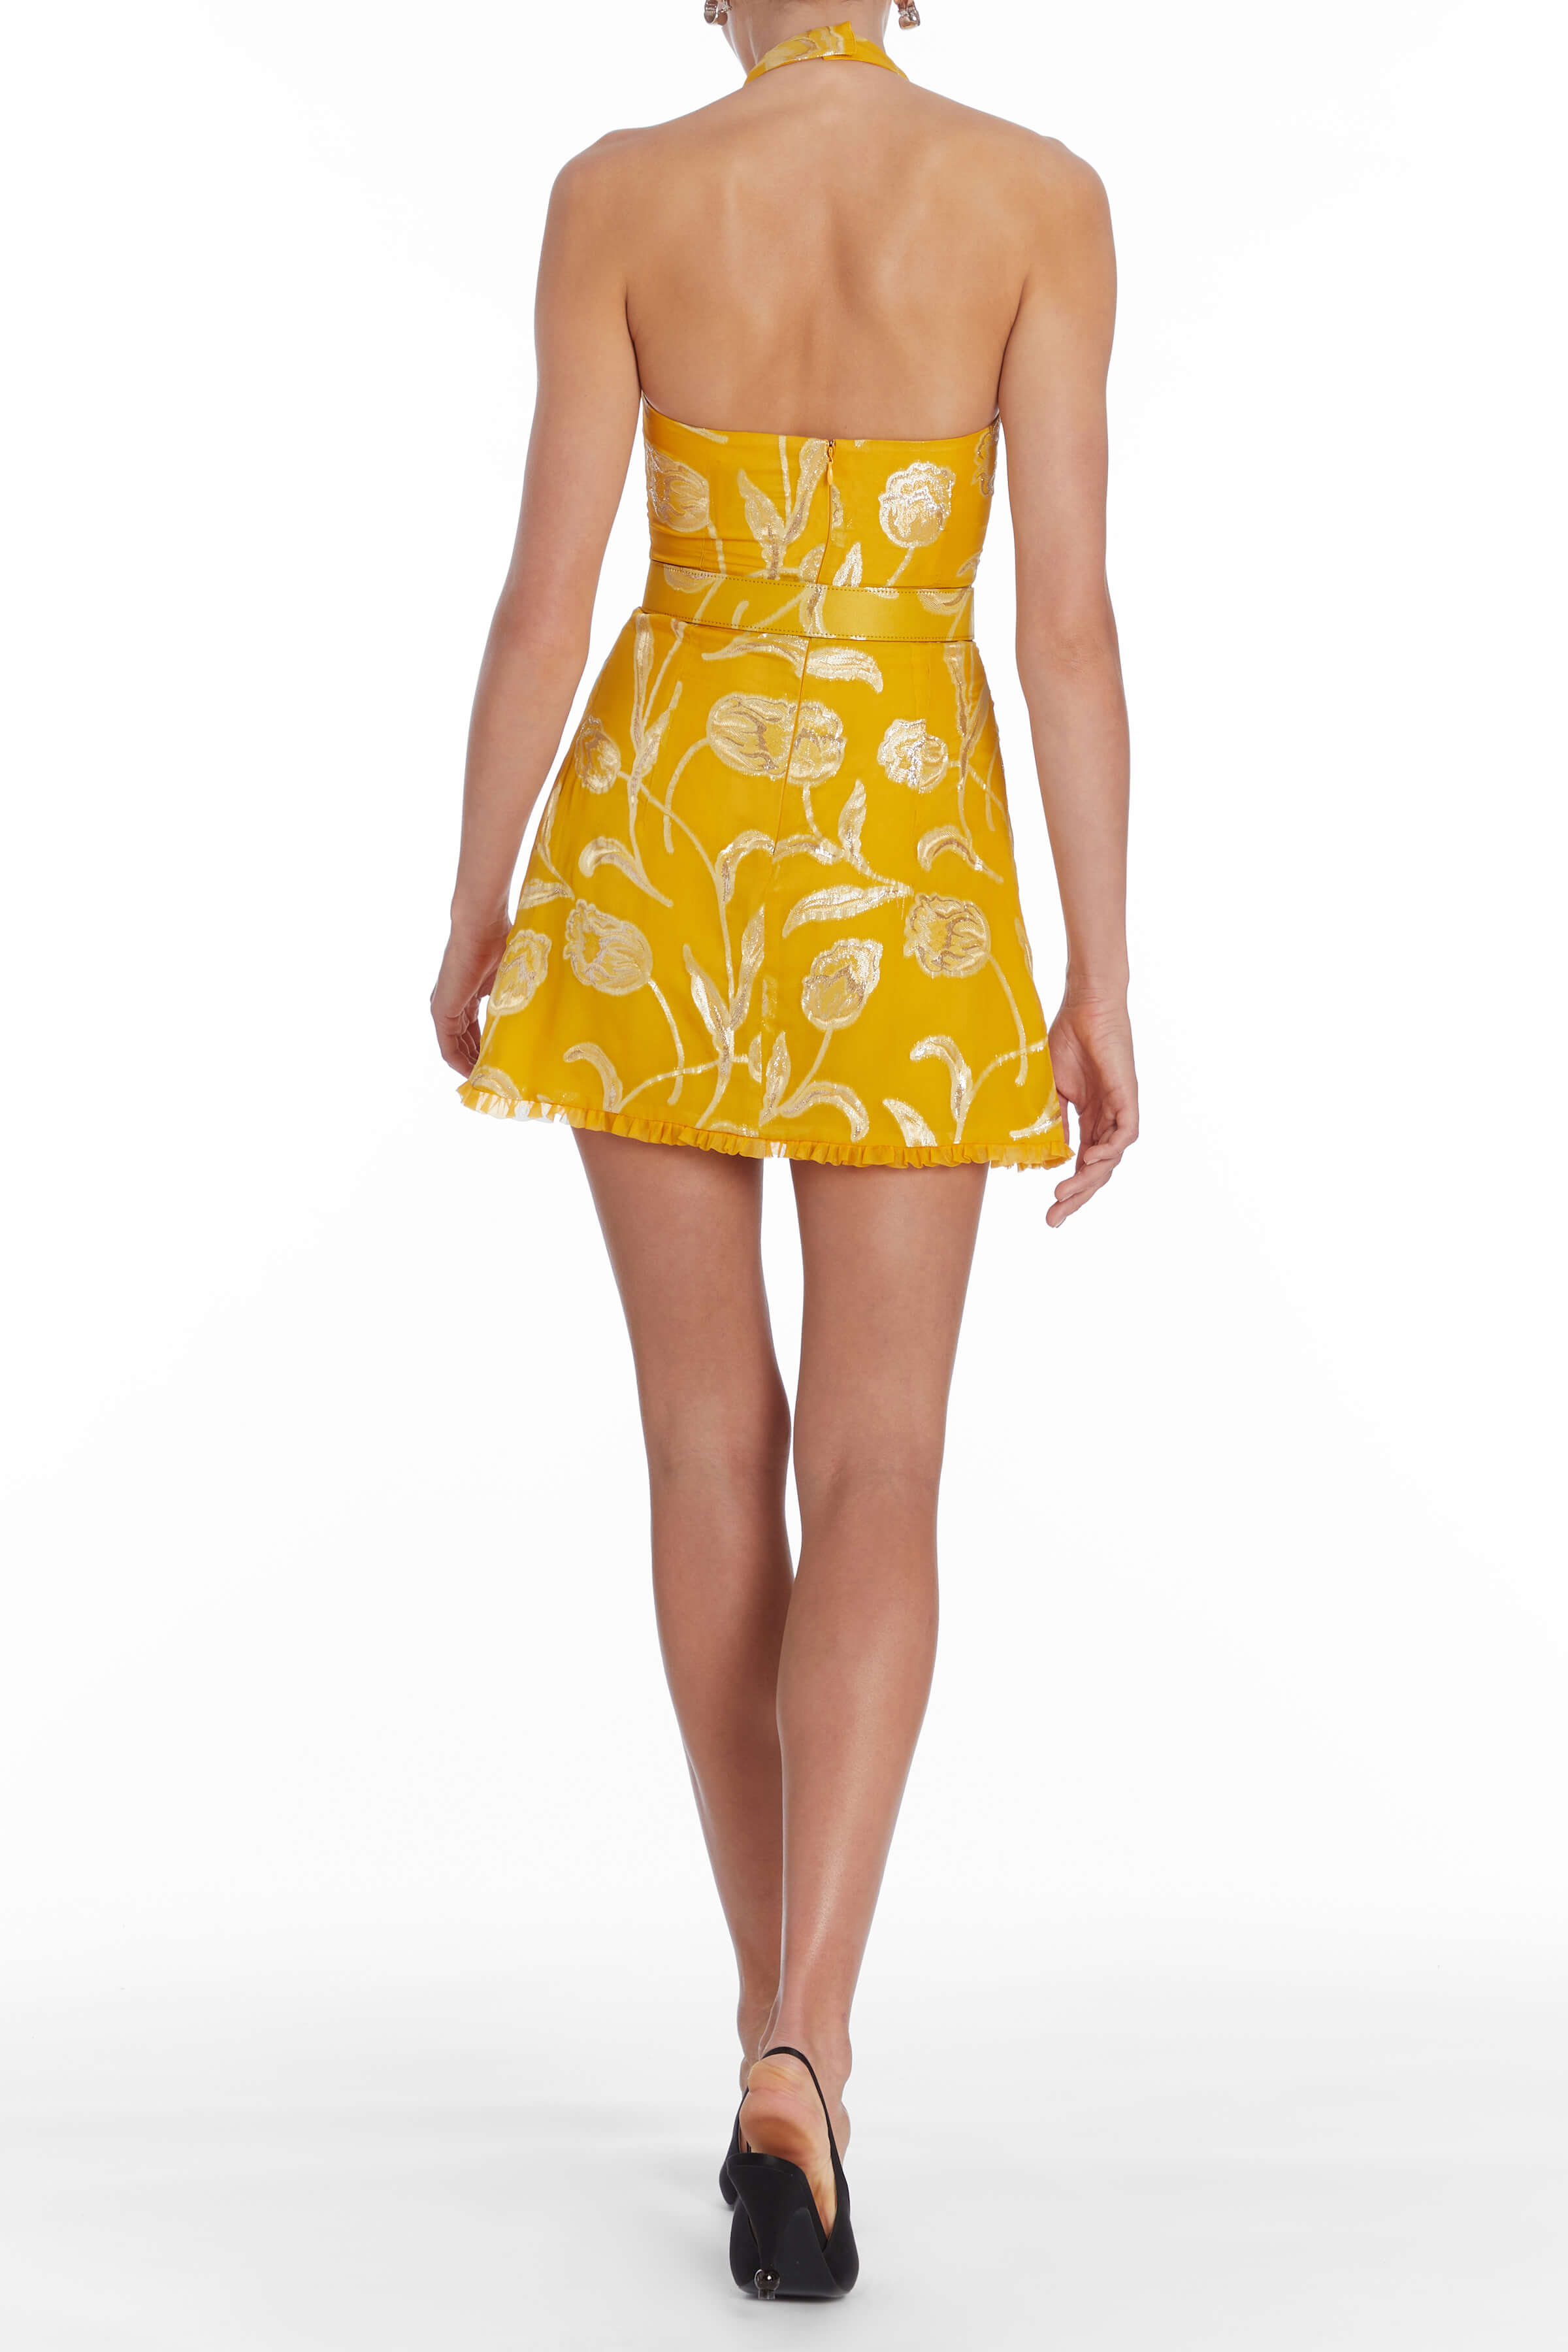 Agave Yellow Halter Mini Dress